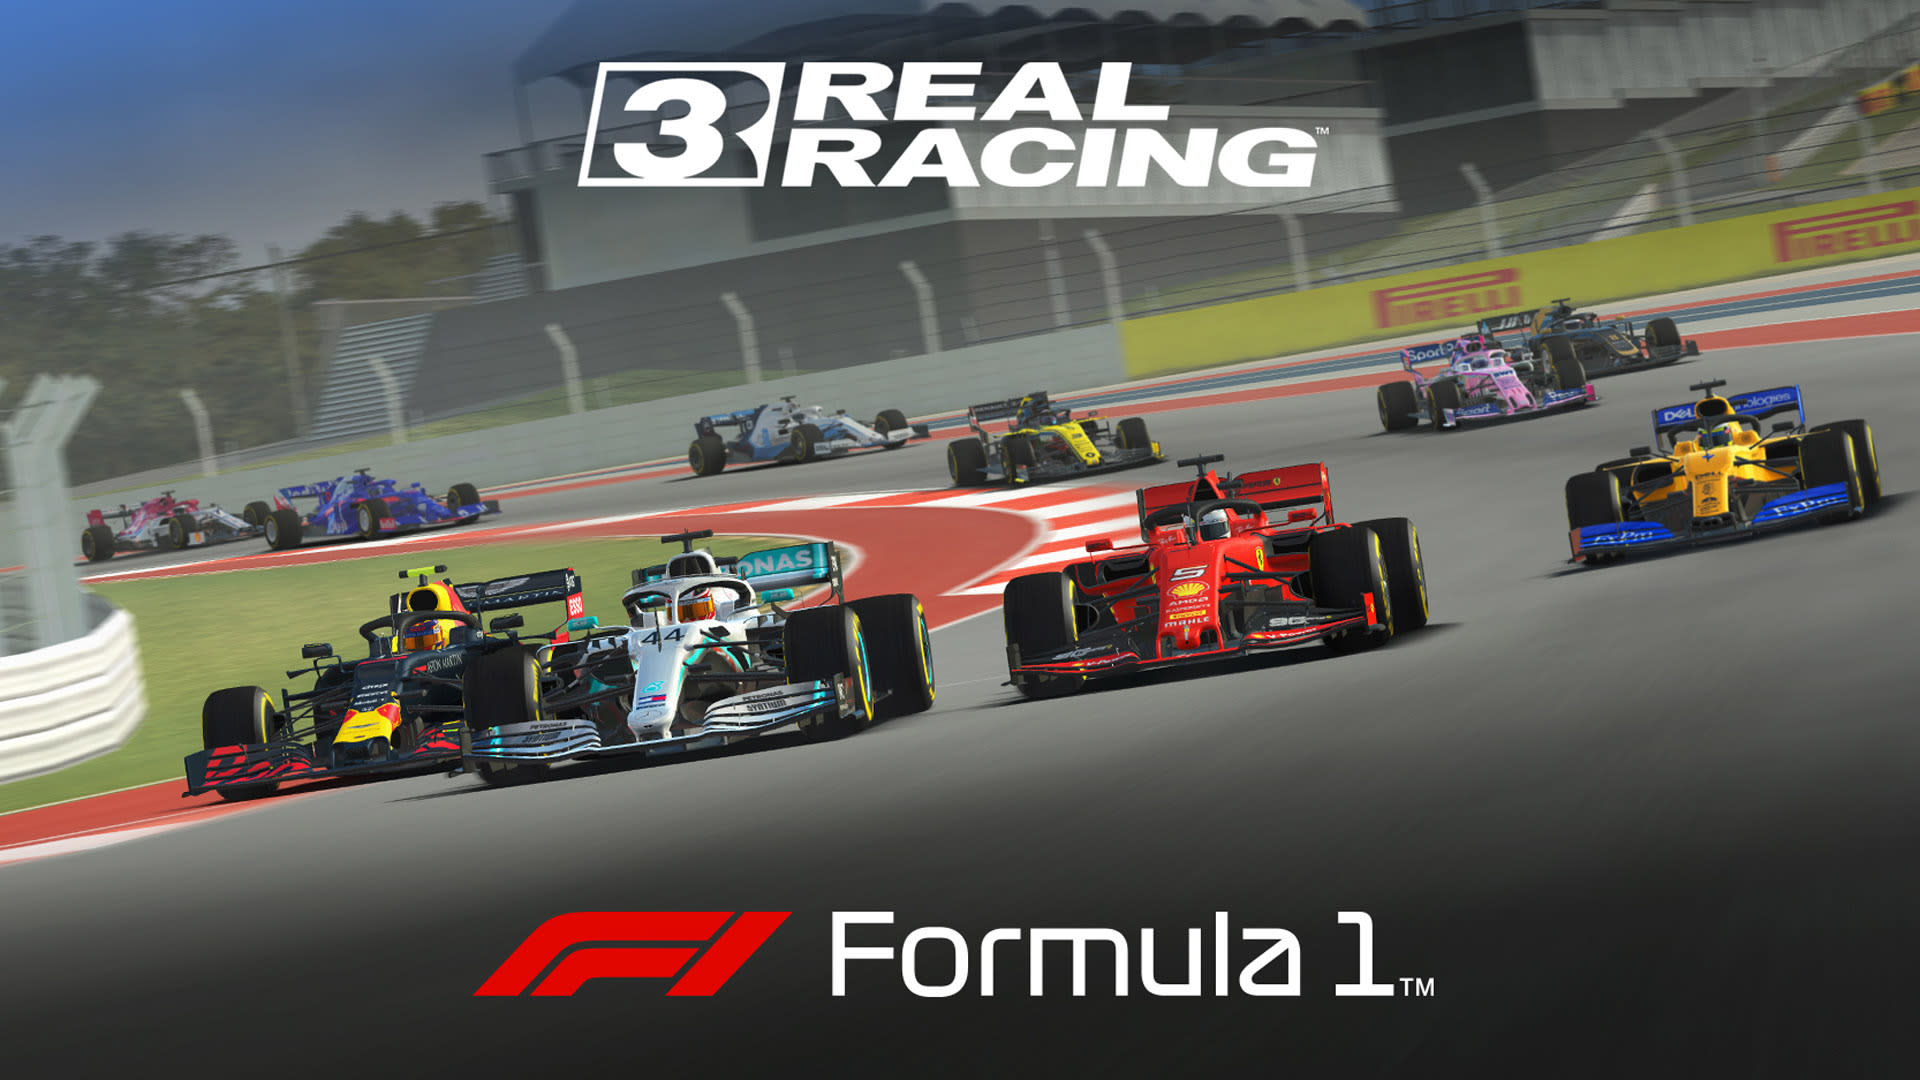 Formula 1 comes to Real Racing 3 Formula 1®